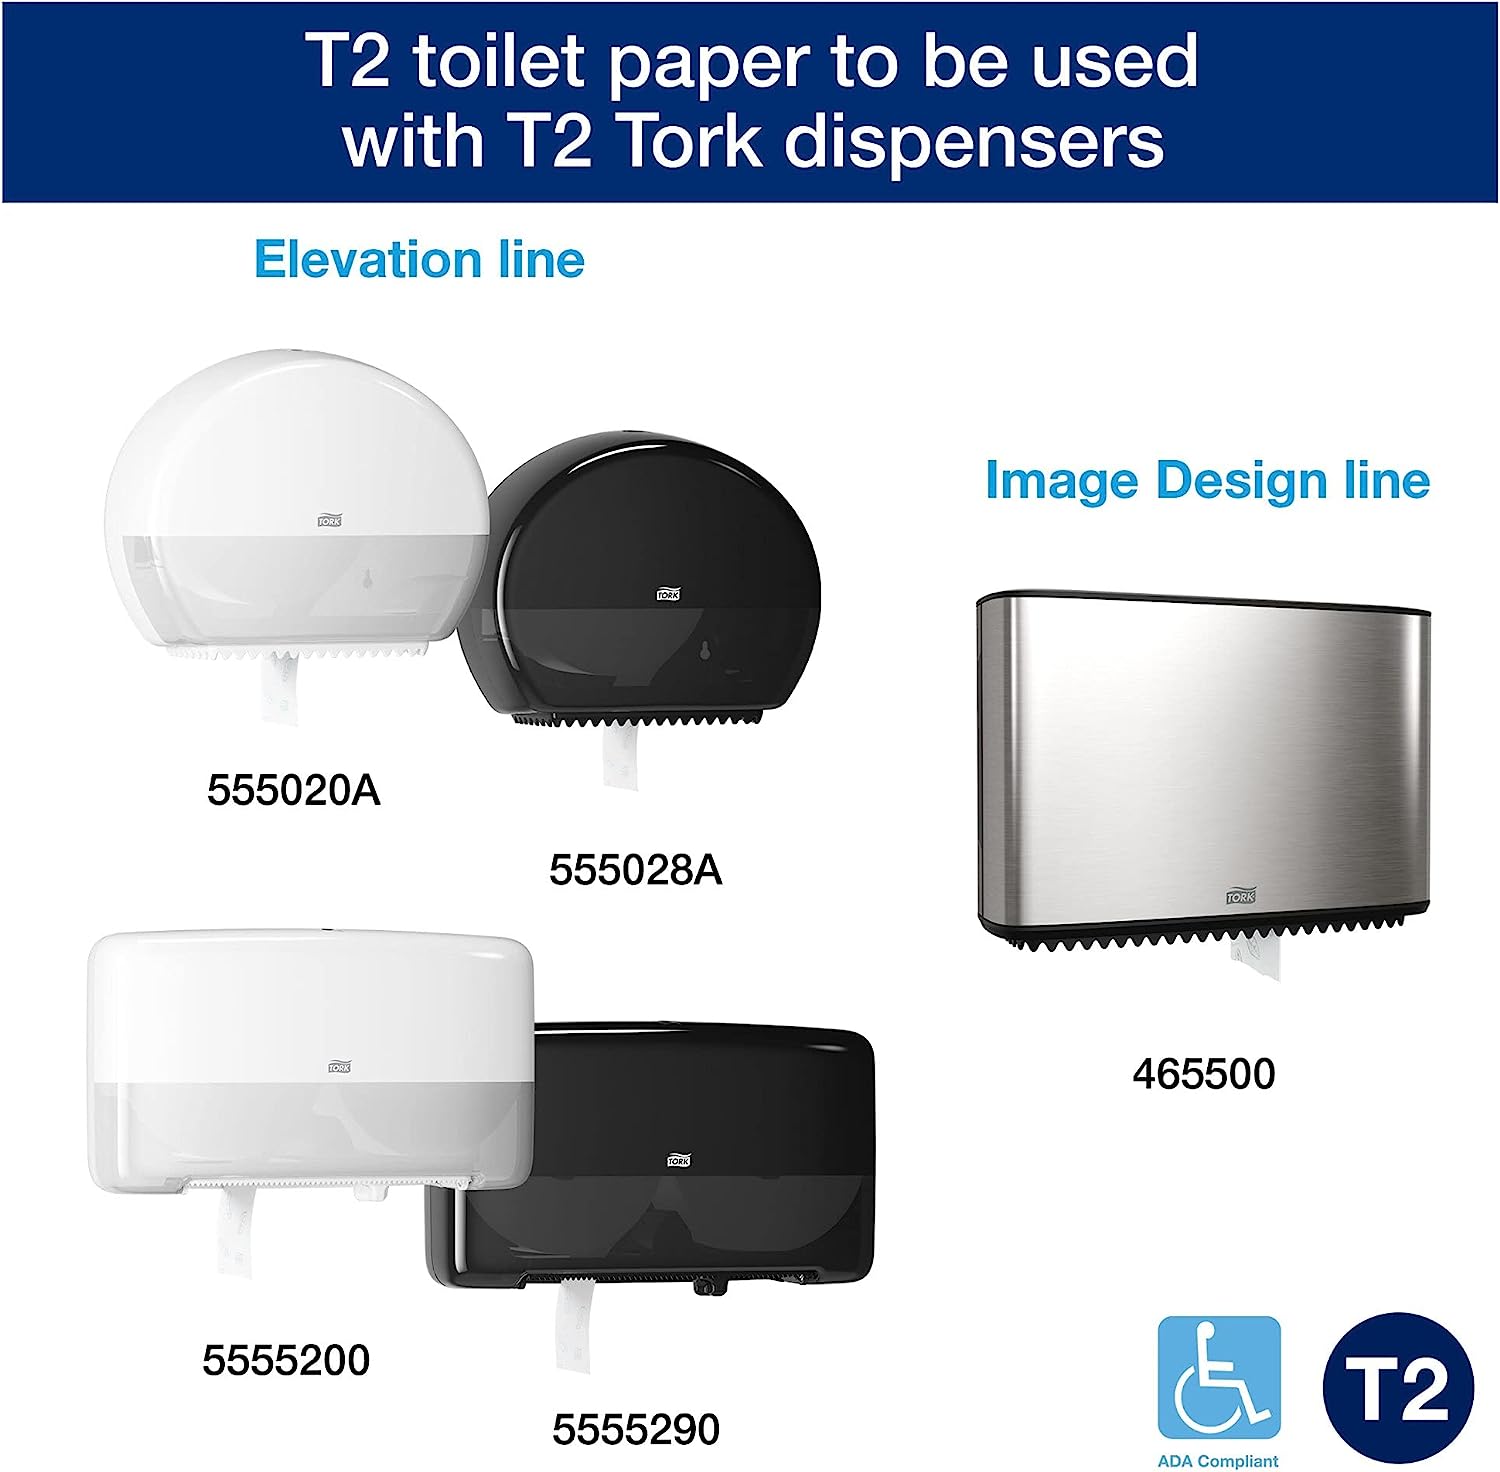 Tork Advanced T2 2-Ply 751' Mini Jumbo Toilet Paper Roll - 12/Case